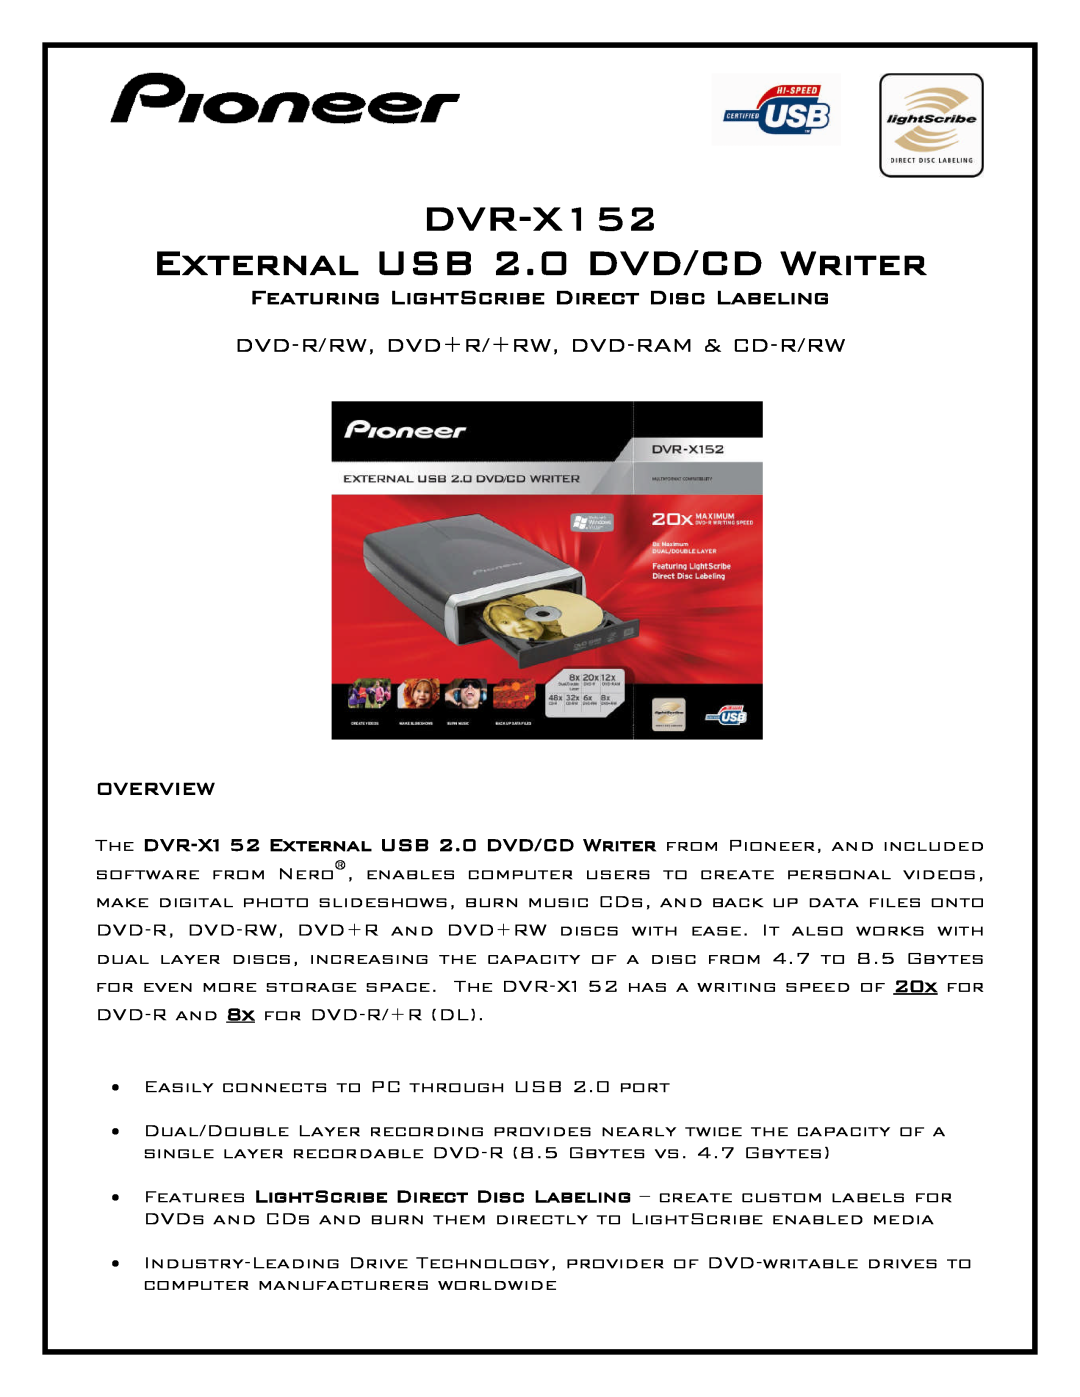 Pioneer DVR-X152 manual Featuring LightScribe Direct Disc Labeling, Dvd-R/Rw, Dvd+R/+Rw, Dvd-Ram & Cd-R/Rw, Overview 